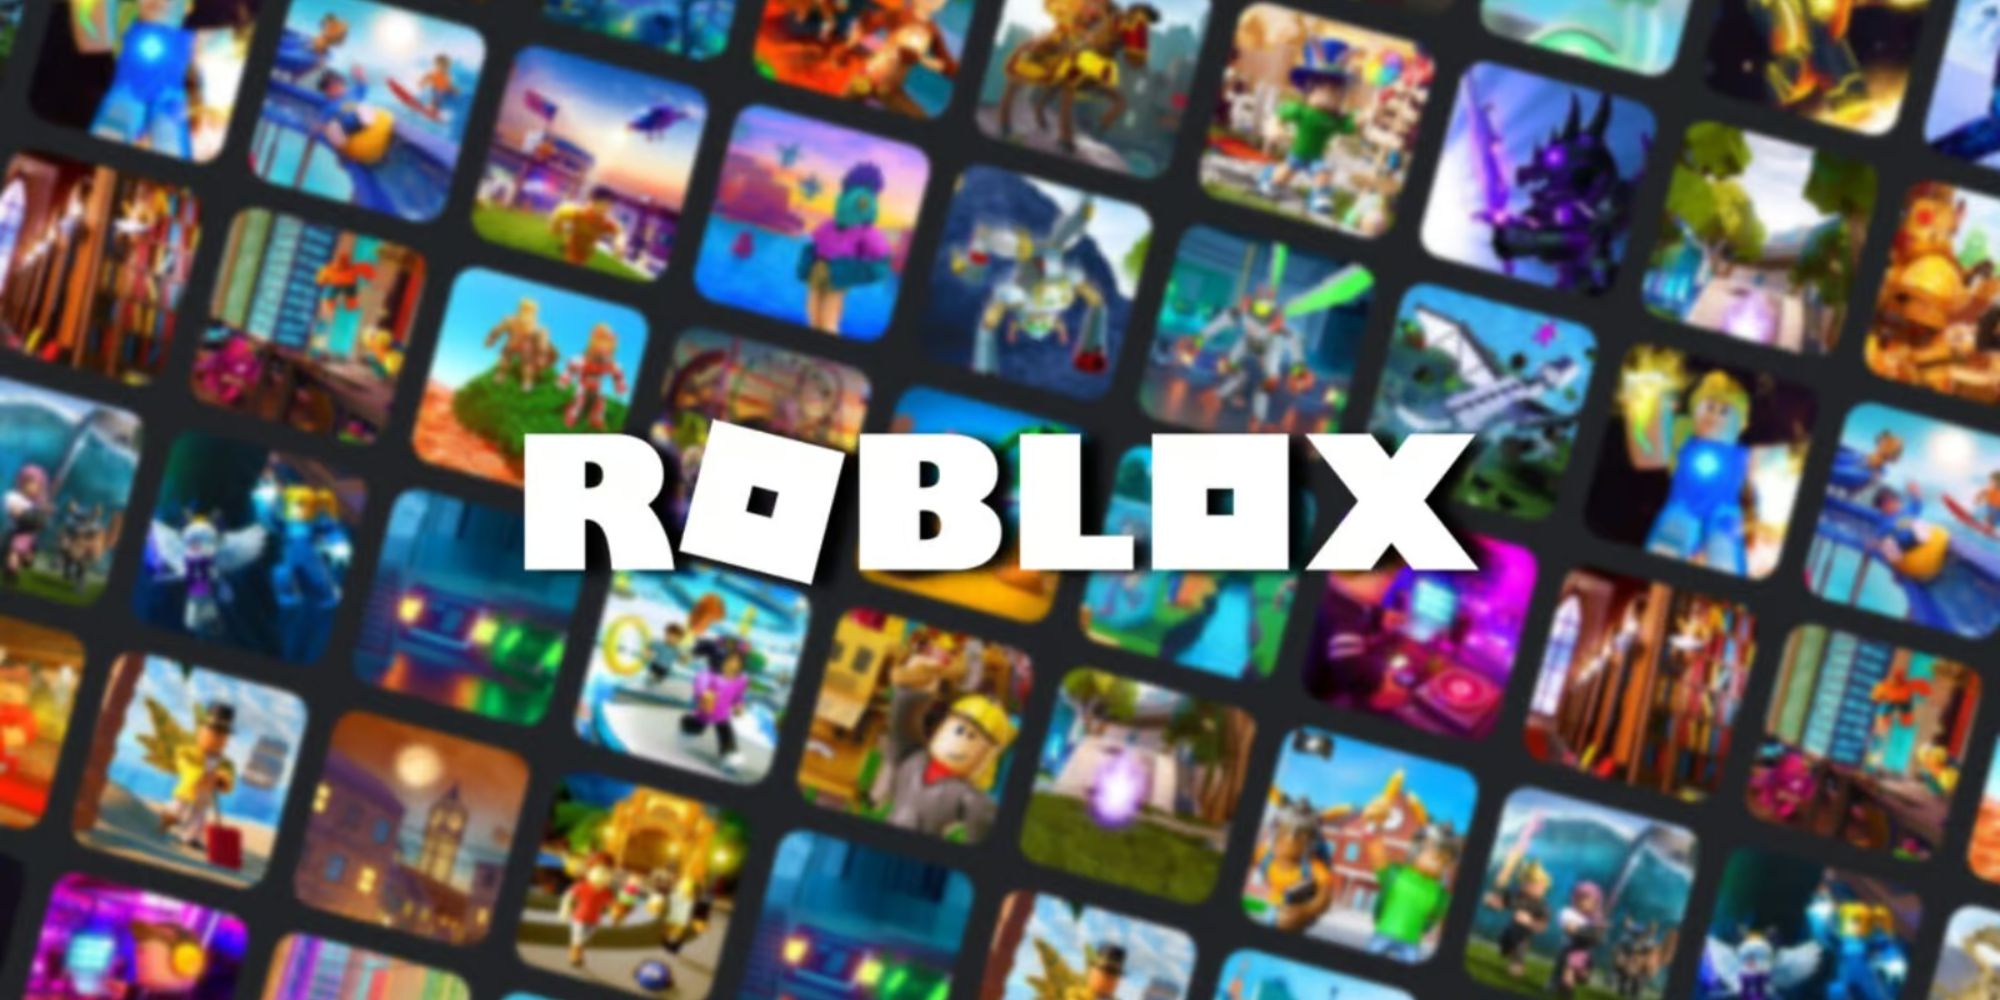 2024 Roblox Logo